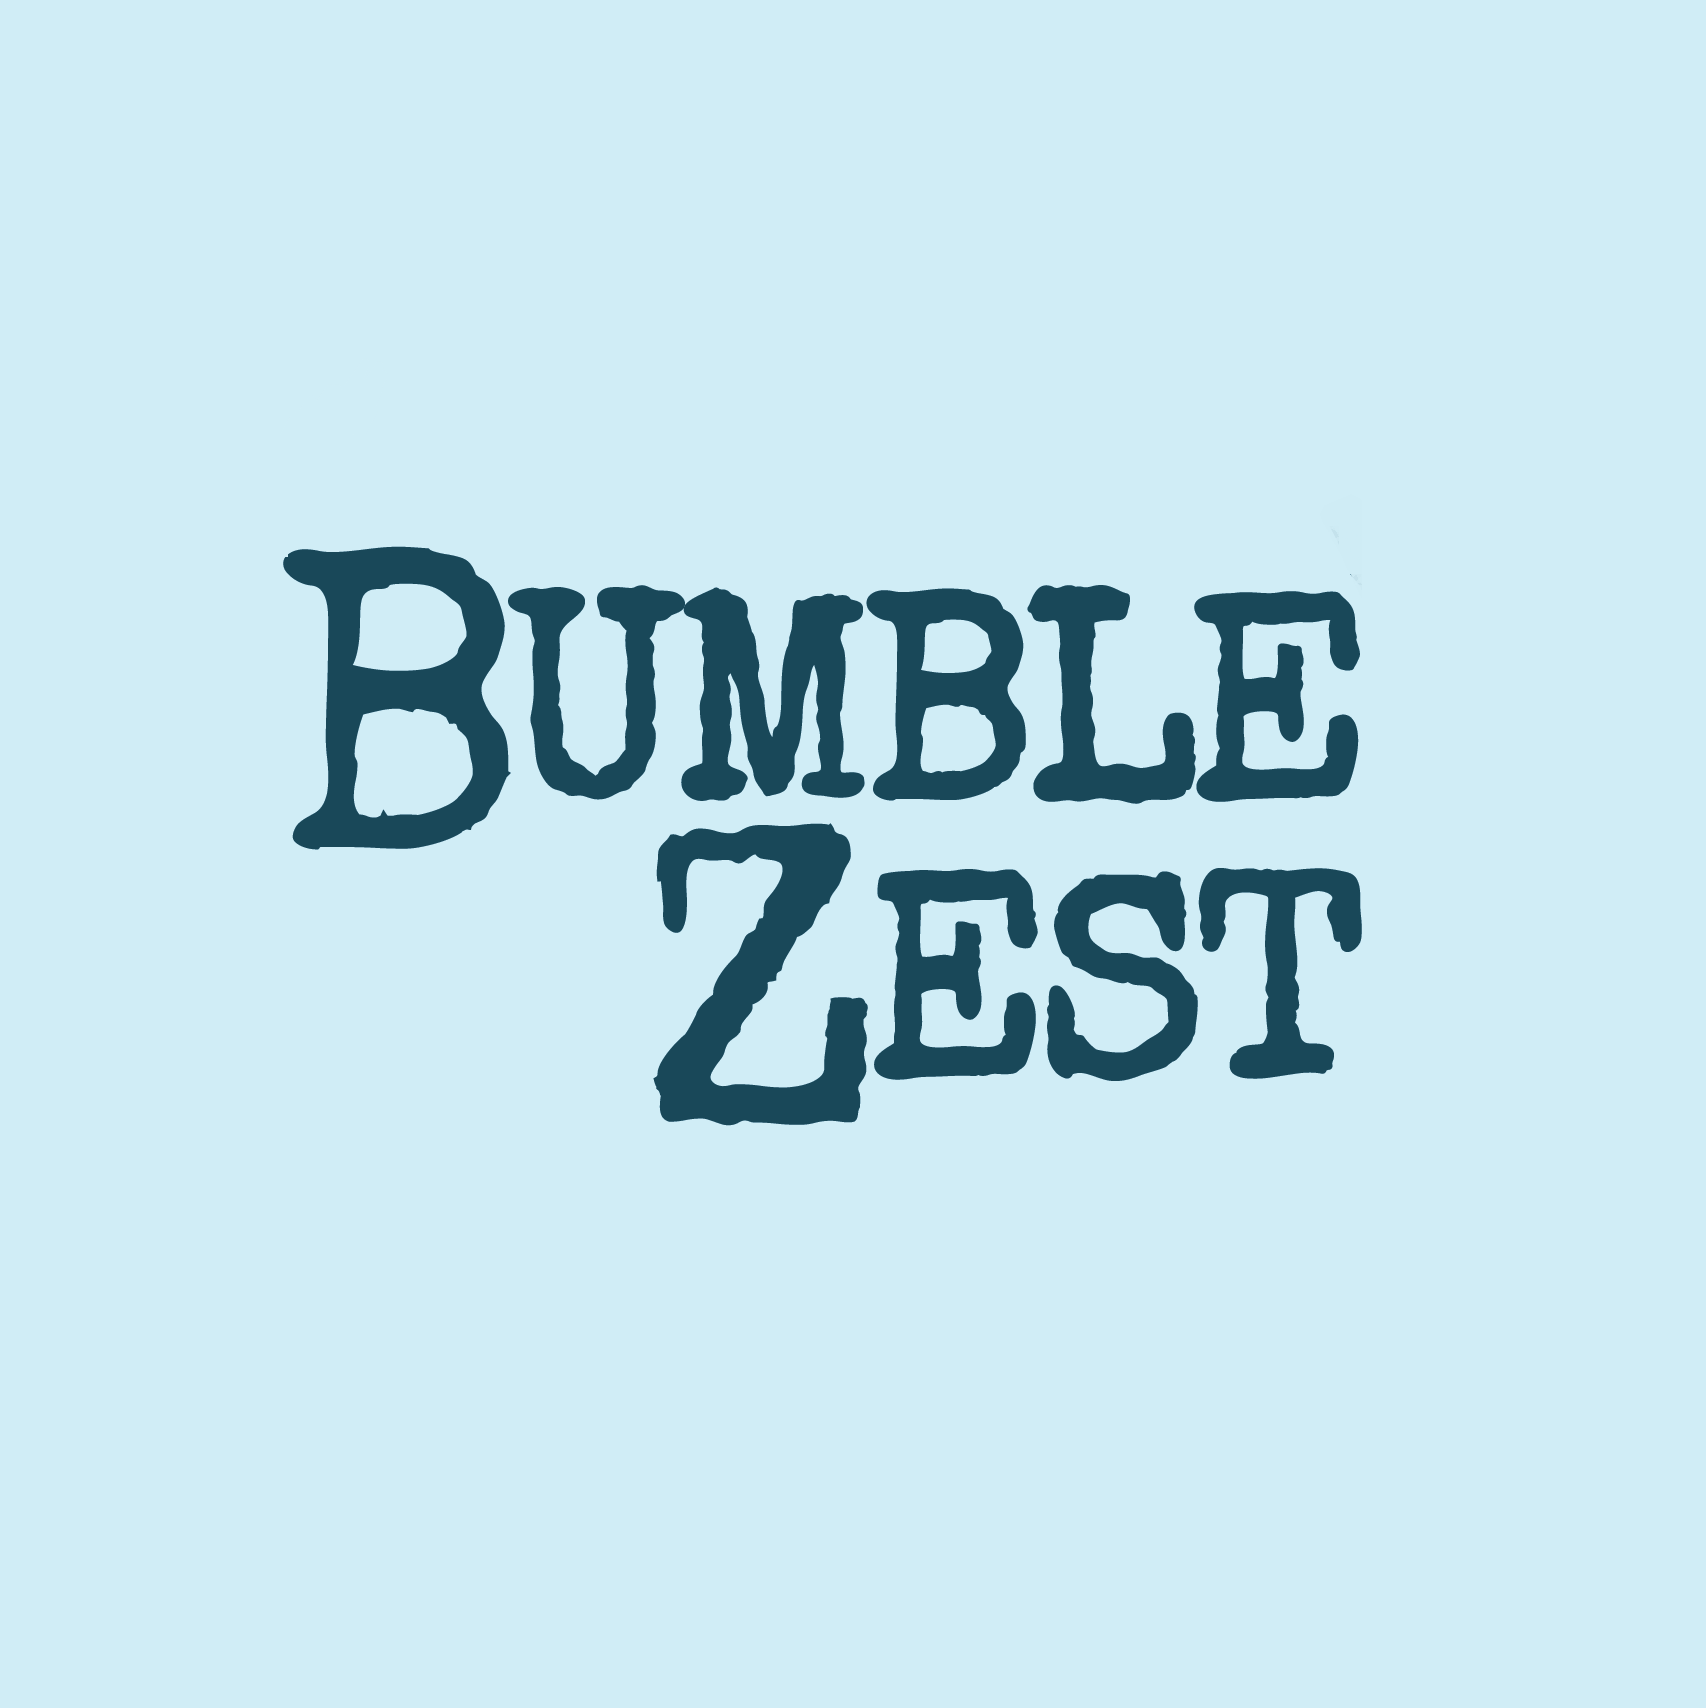 BumbleZest